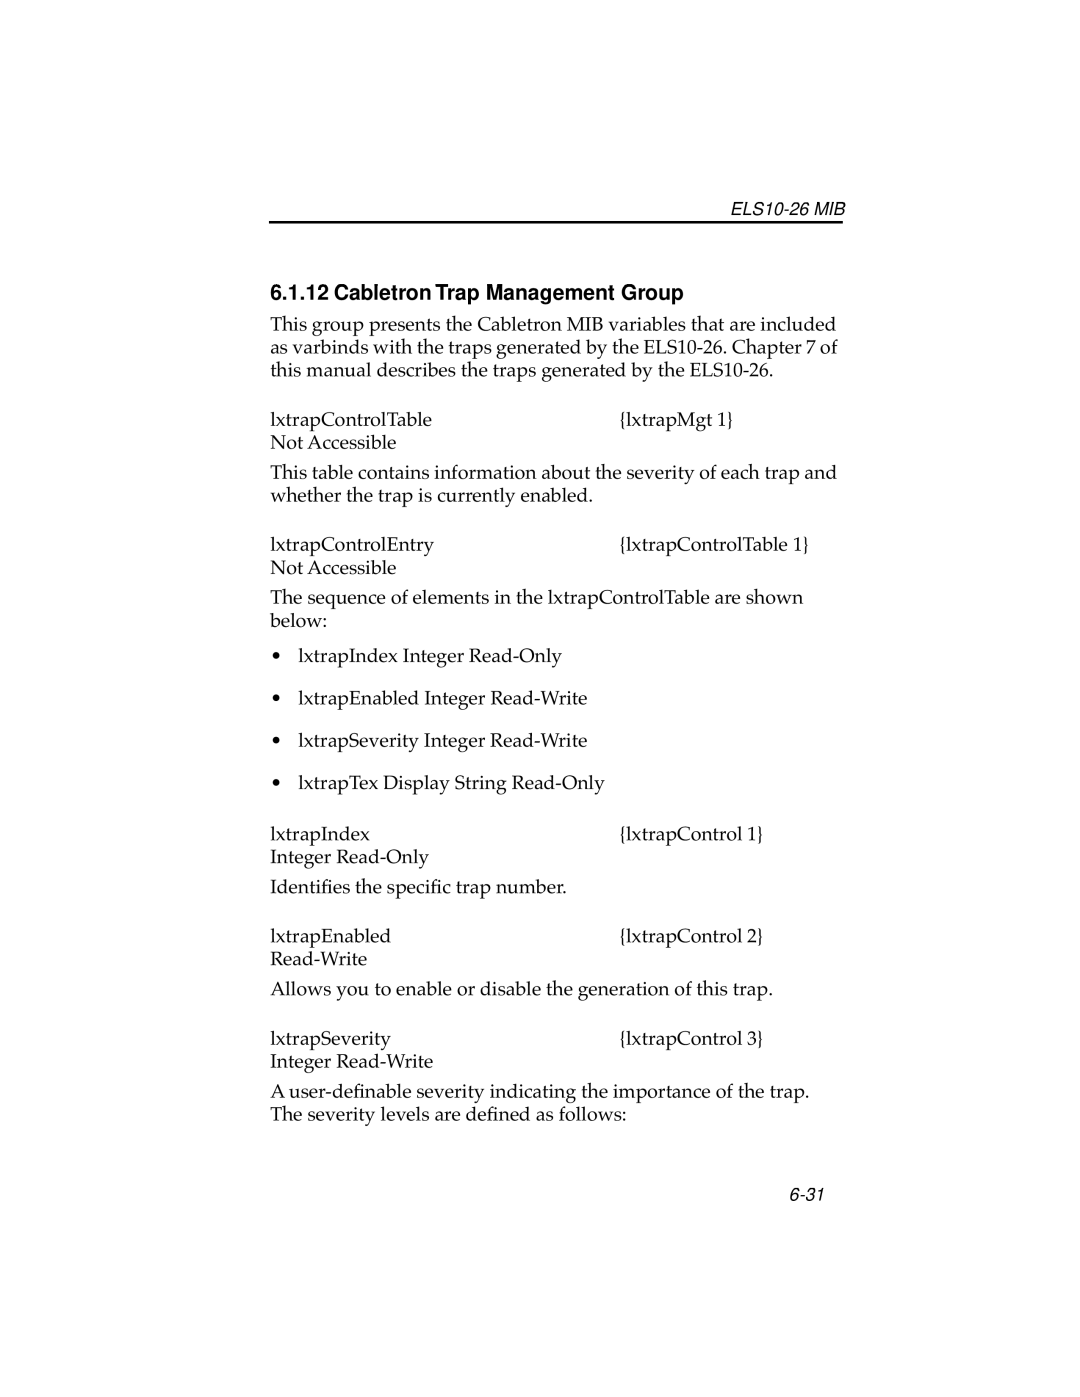 Cabletron Systems ELS10-26 manual Cabletron Trap Management Group 